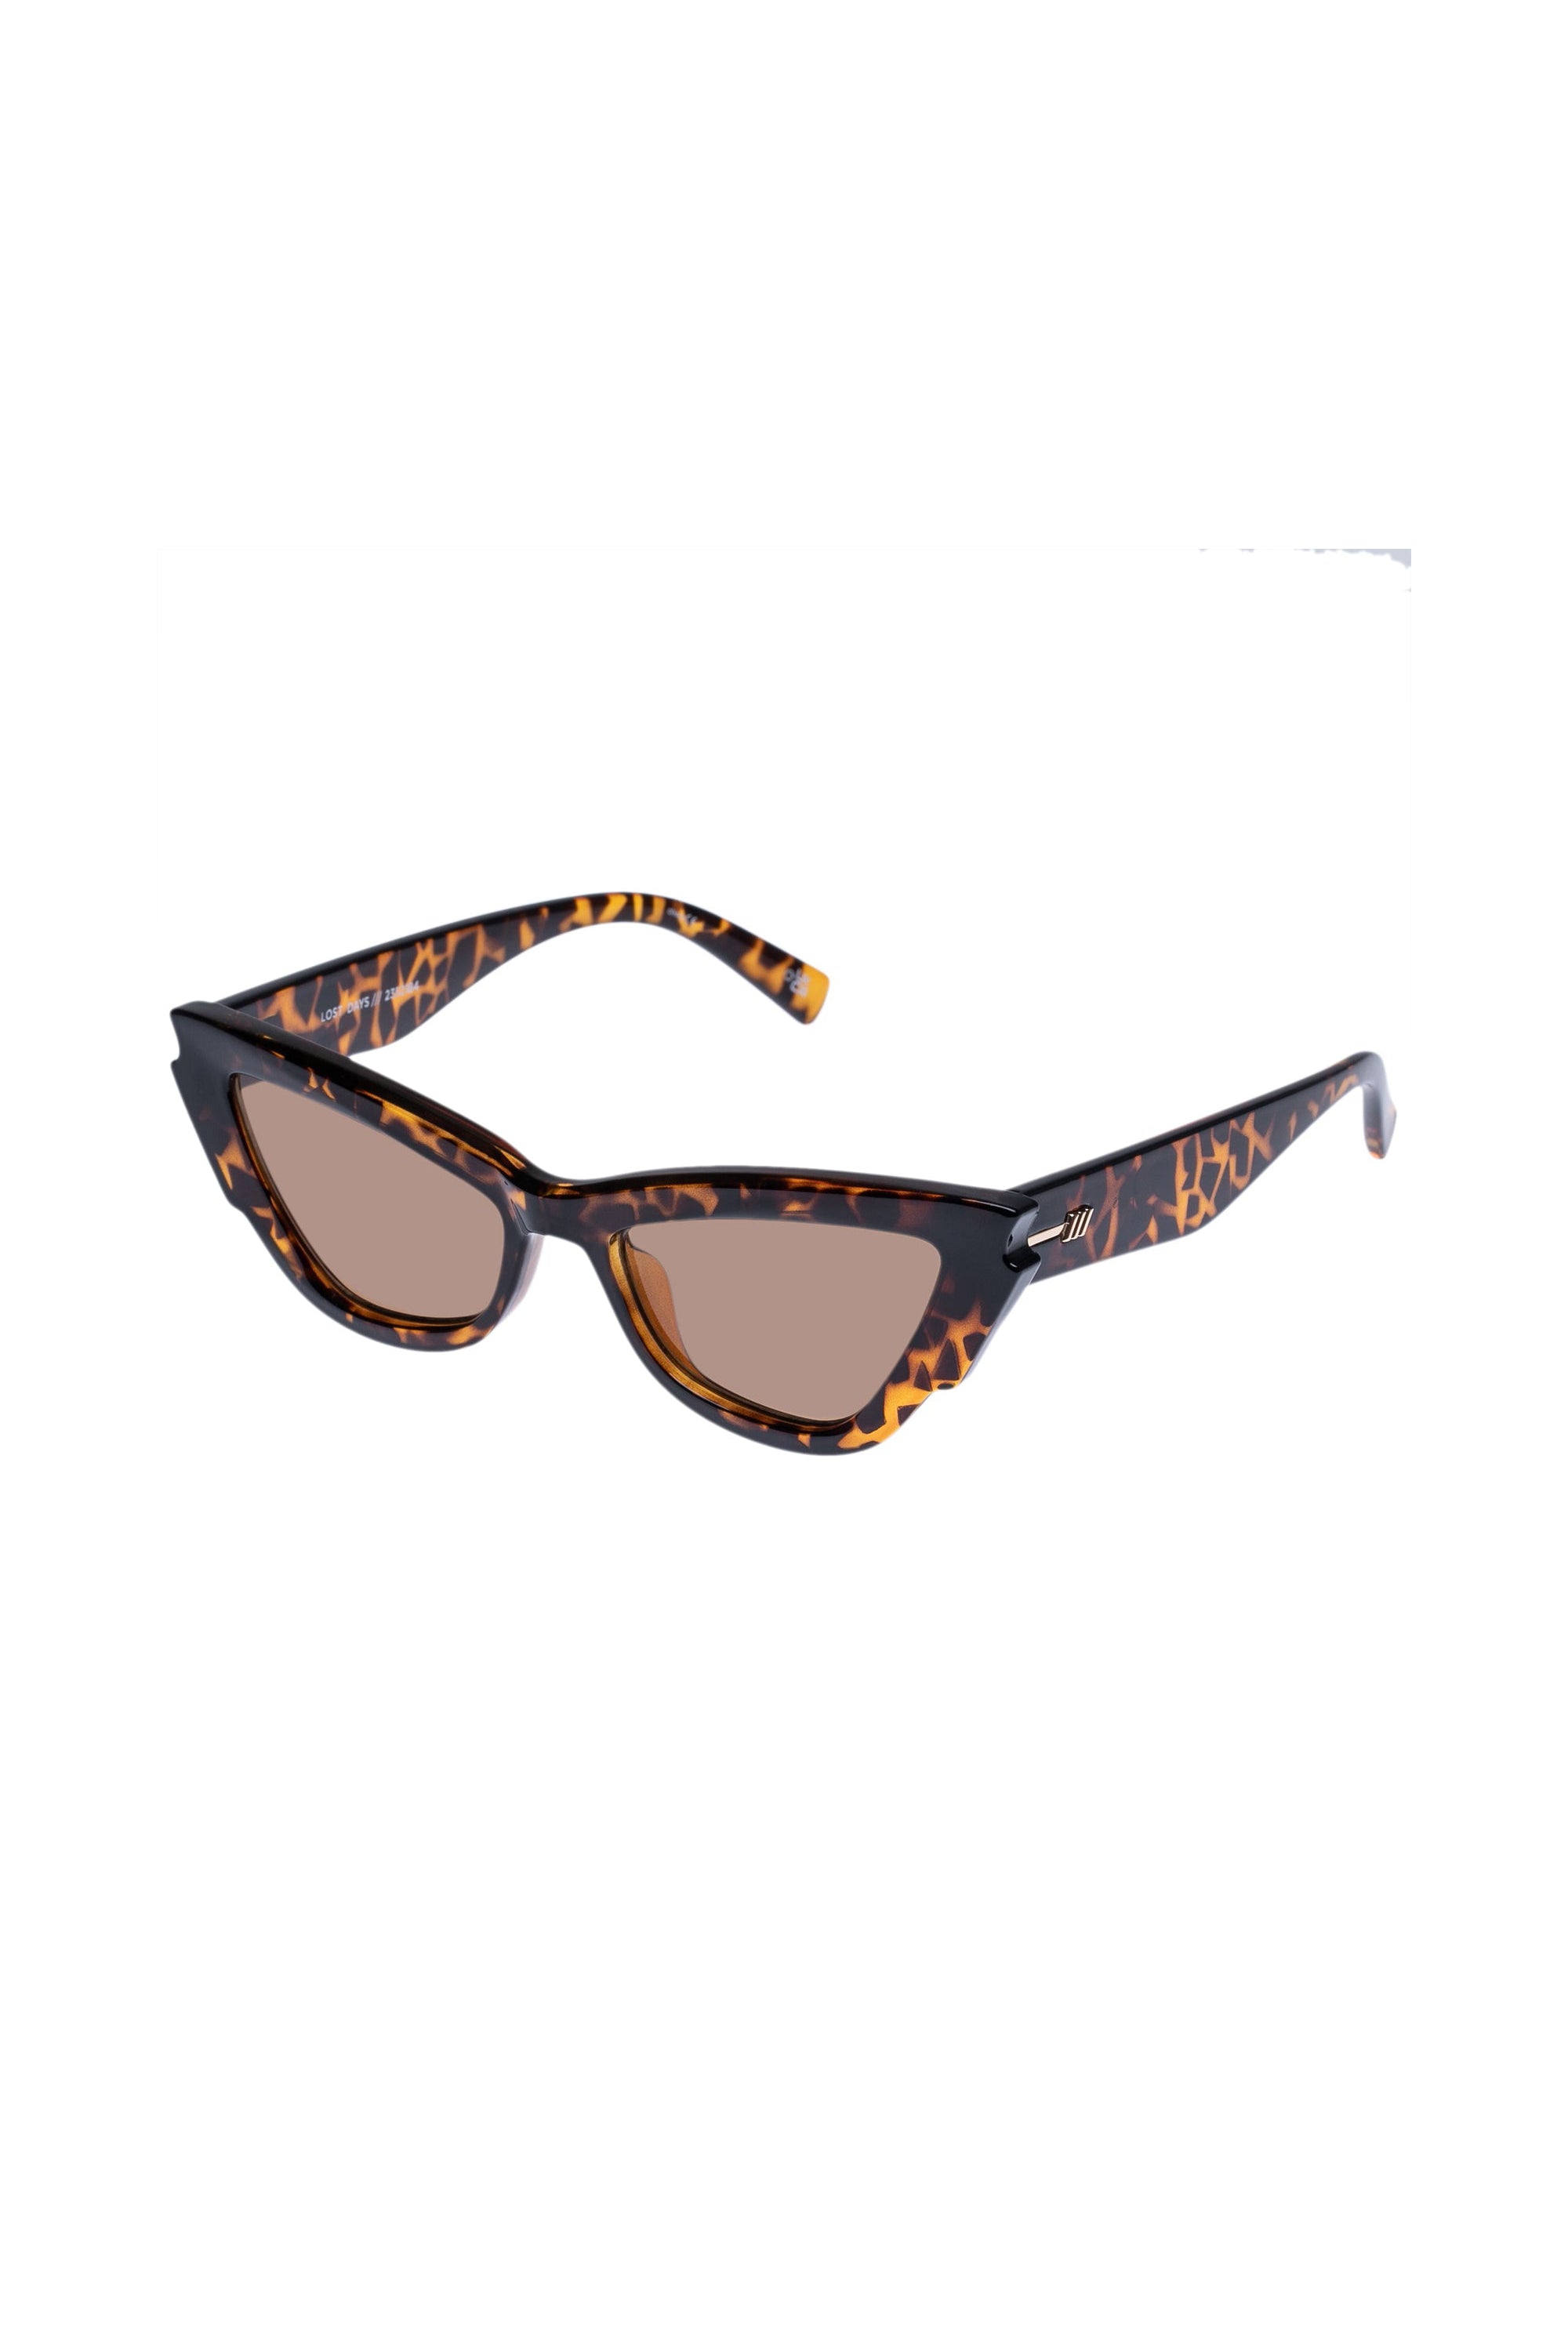 Le Specs Lost Days Sunglasses - Leopard Tort - RUM Amsterdam